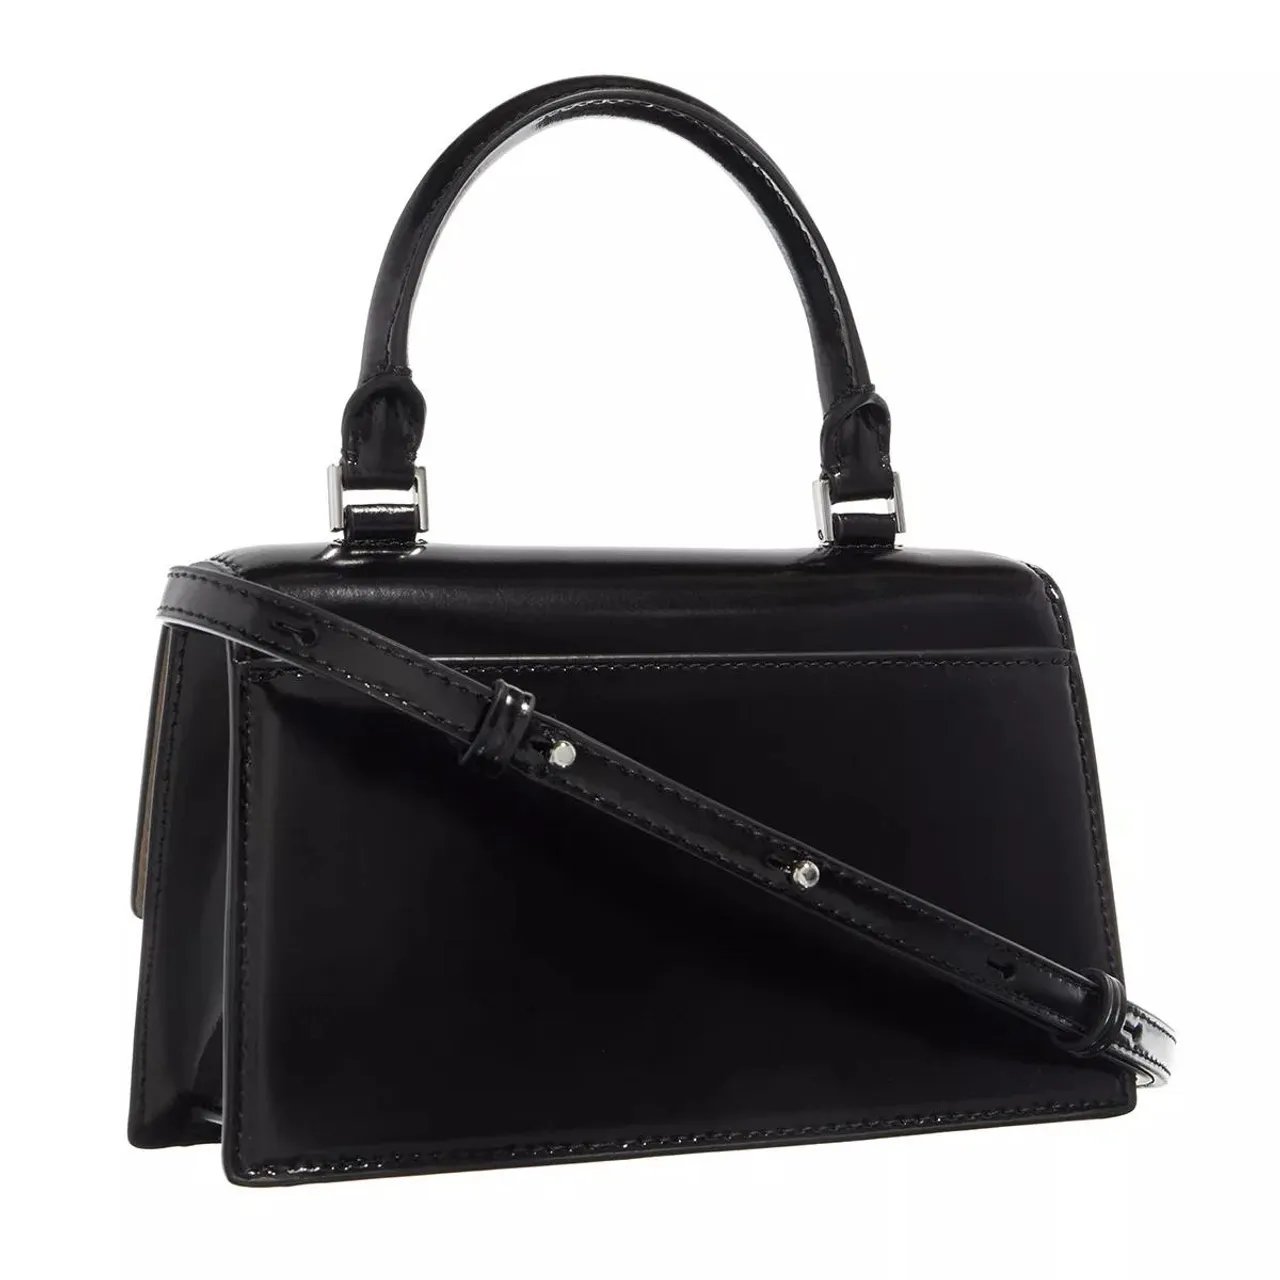 Tory Burch Crossbody Bags - Trend Spazzolato Mini Top-Handle Bag - black - Crossbody Bags for ladies